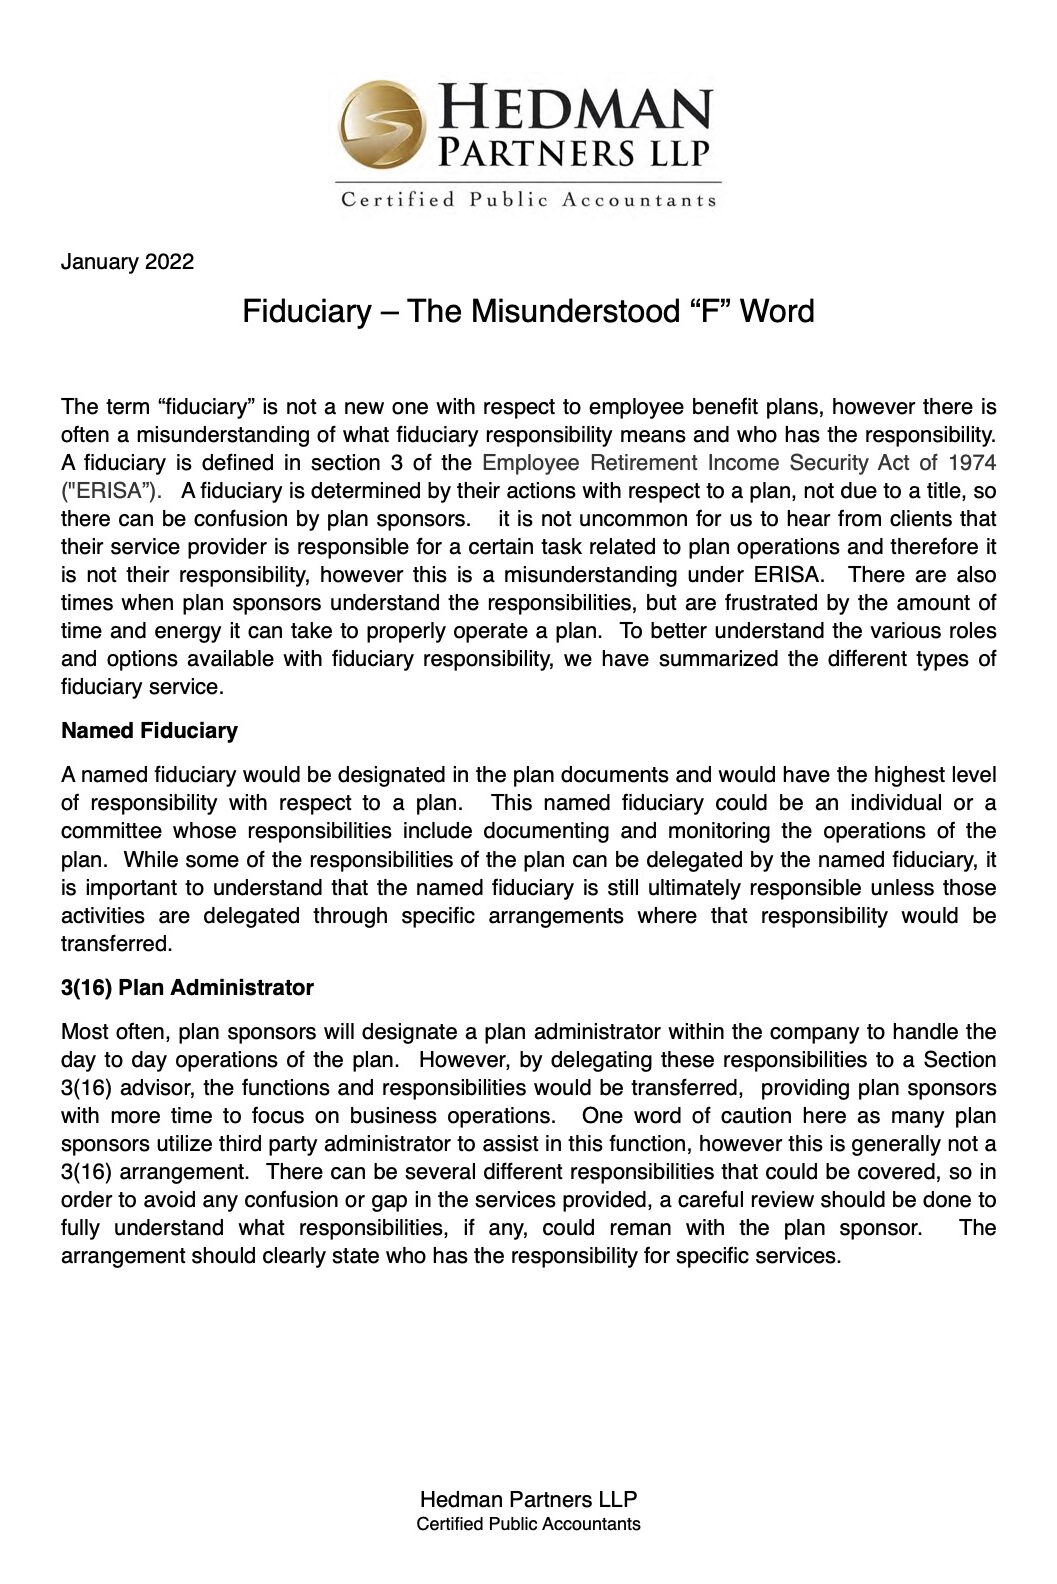 Fiduciary – The Misunderstood “F” Word